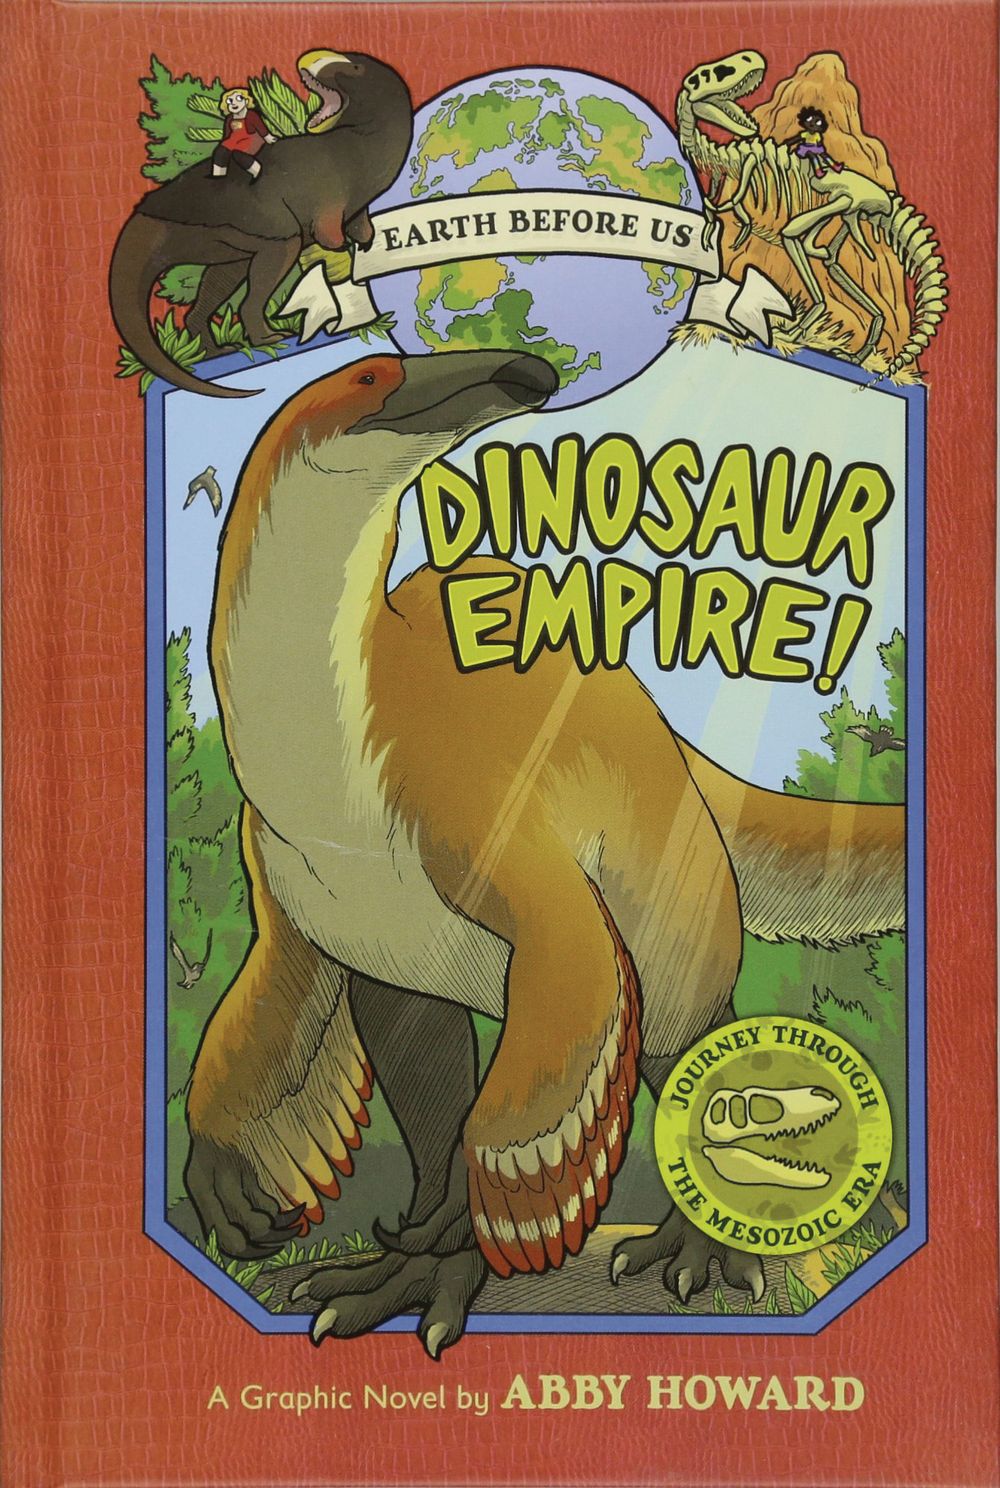 Earth Before Us Yr TP VOL 01 Dinosaur Empire